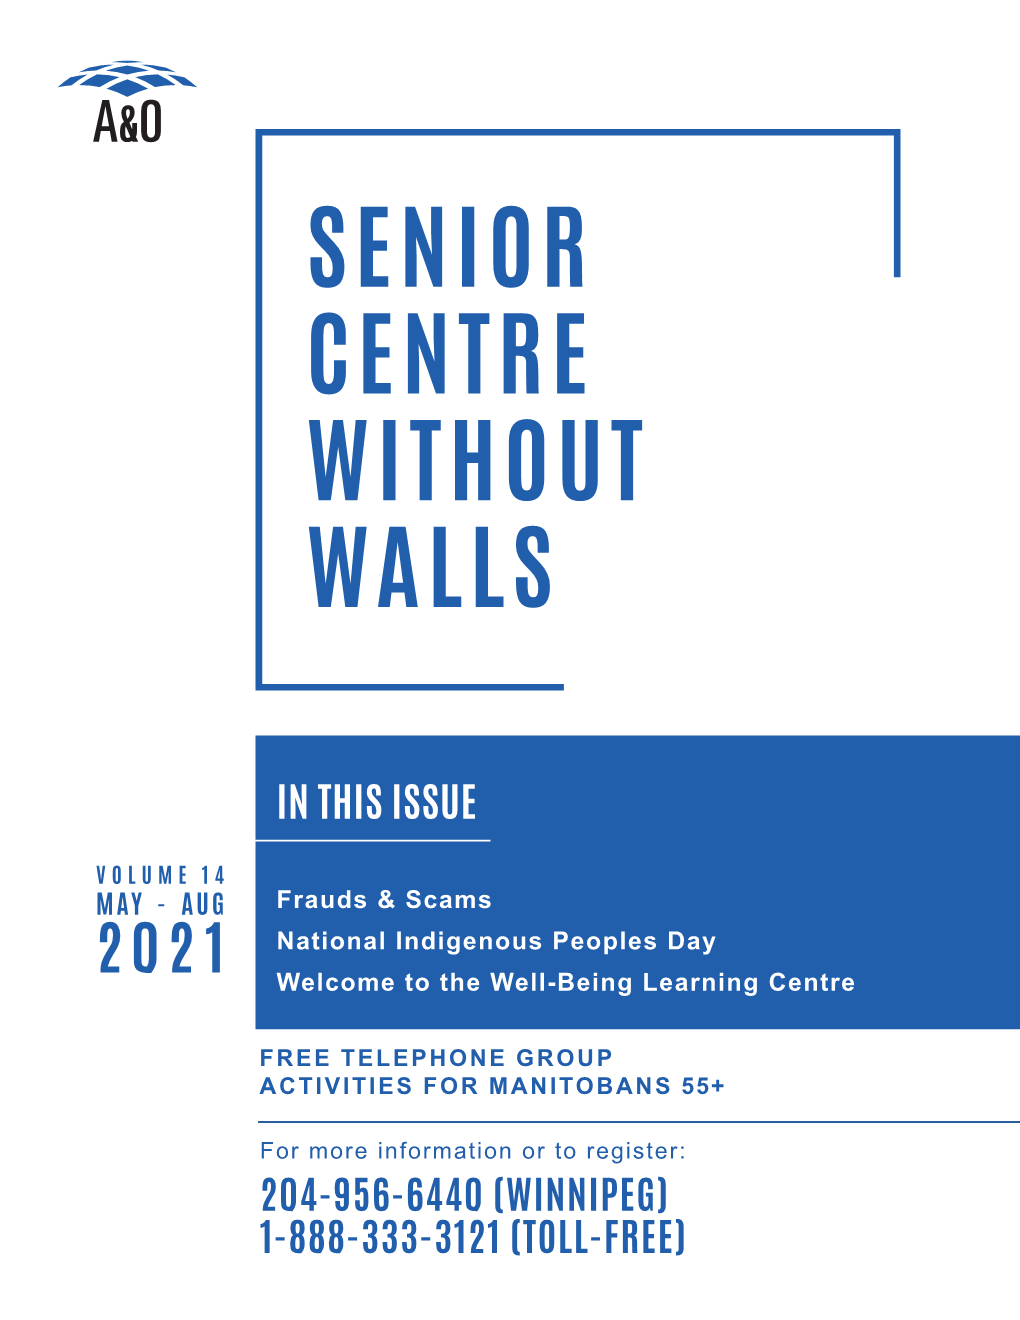 Senior Centre Without Walls Program Guide Vol. 14 Spring 2021